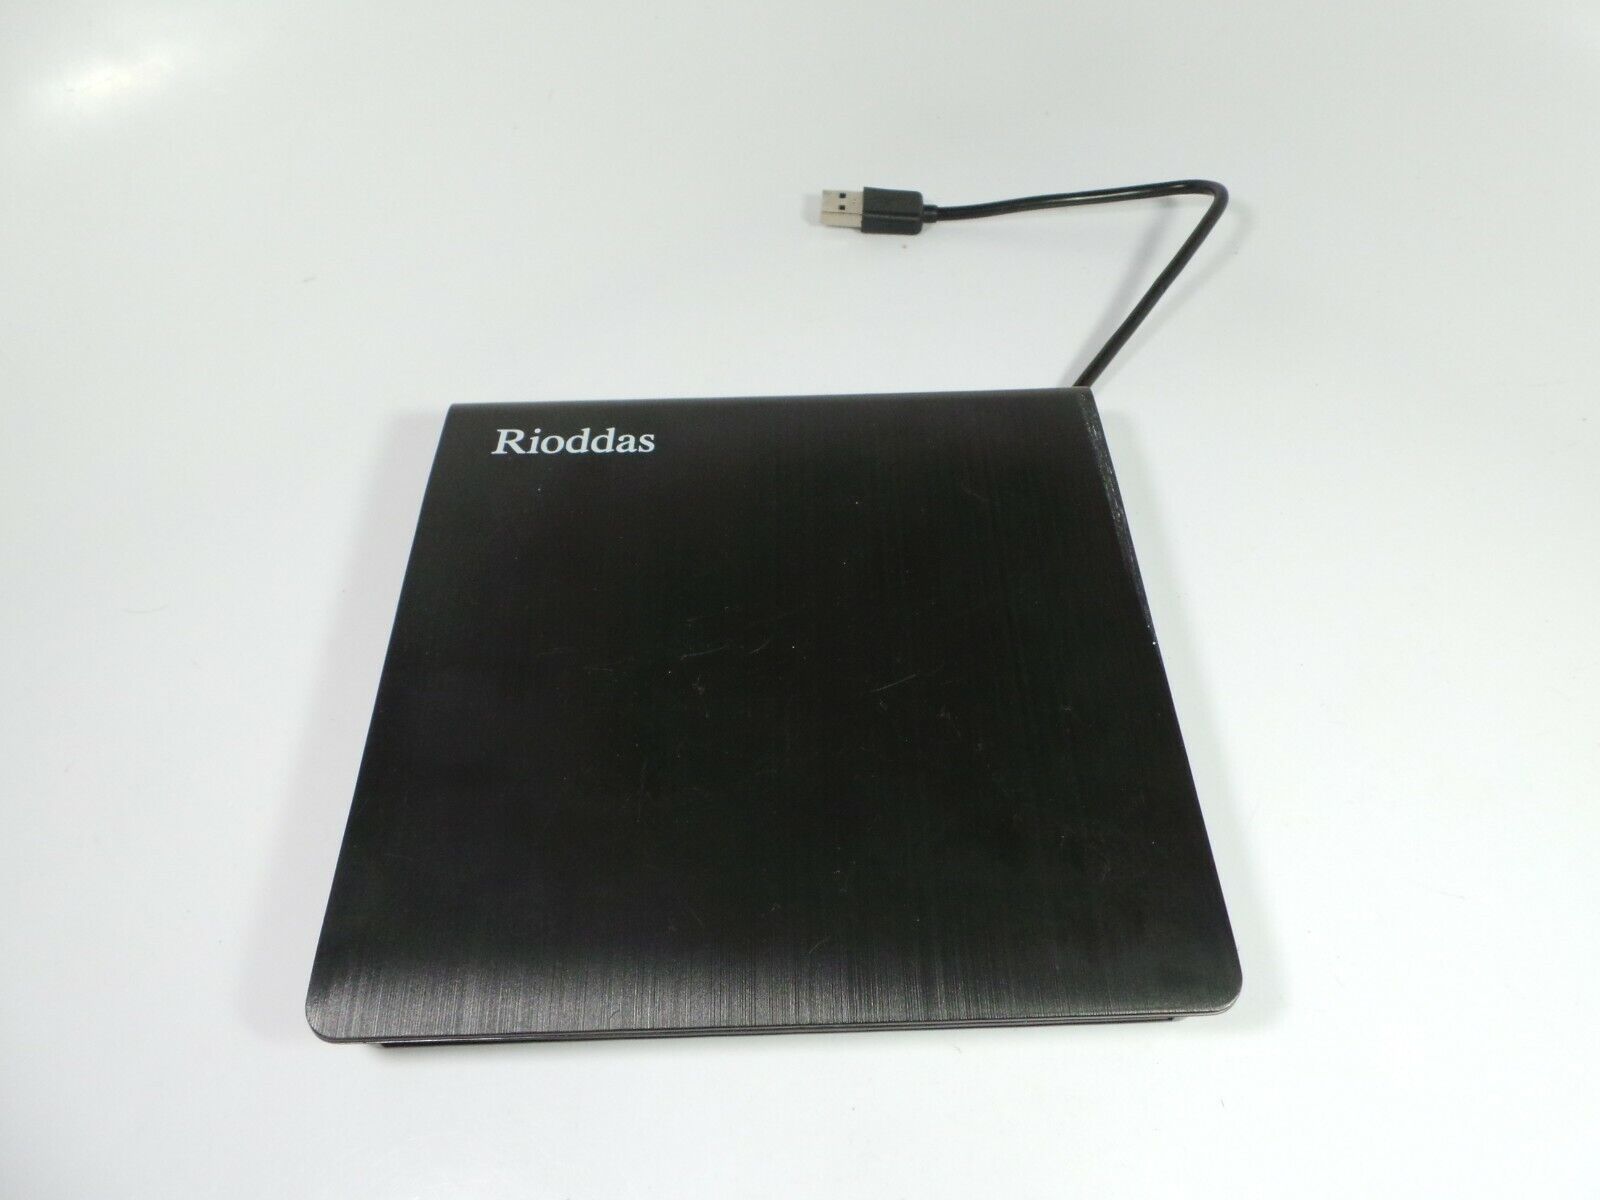 Rioddas BT638 USB 3.0 Portable Pop Up Mobile External ODD & HDD Device